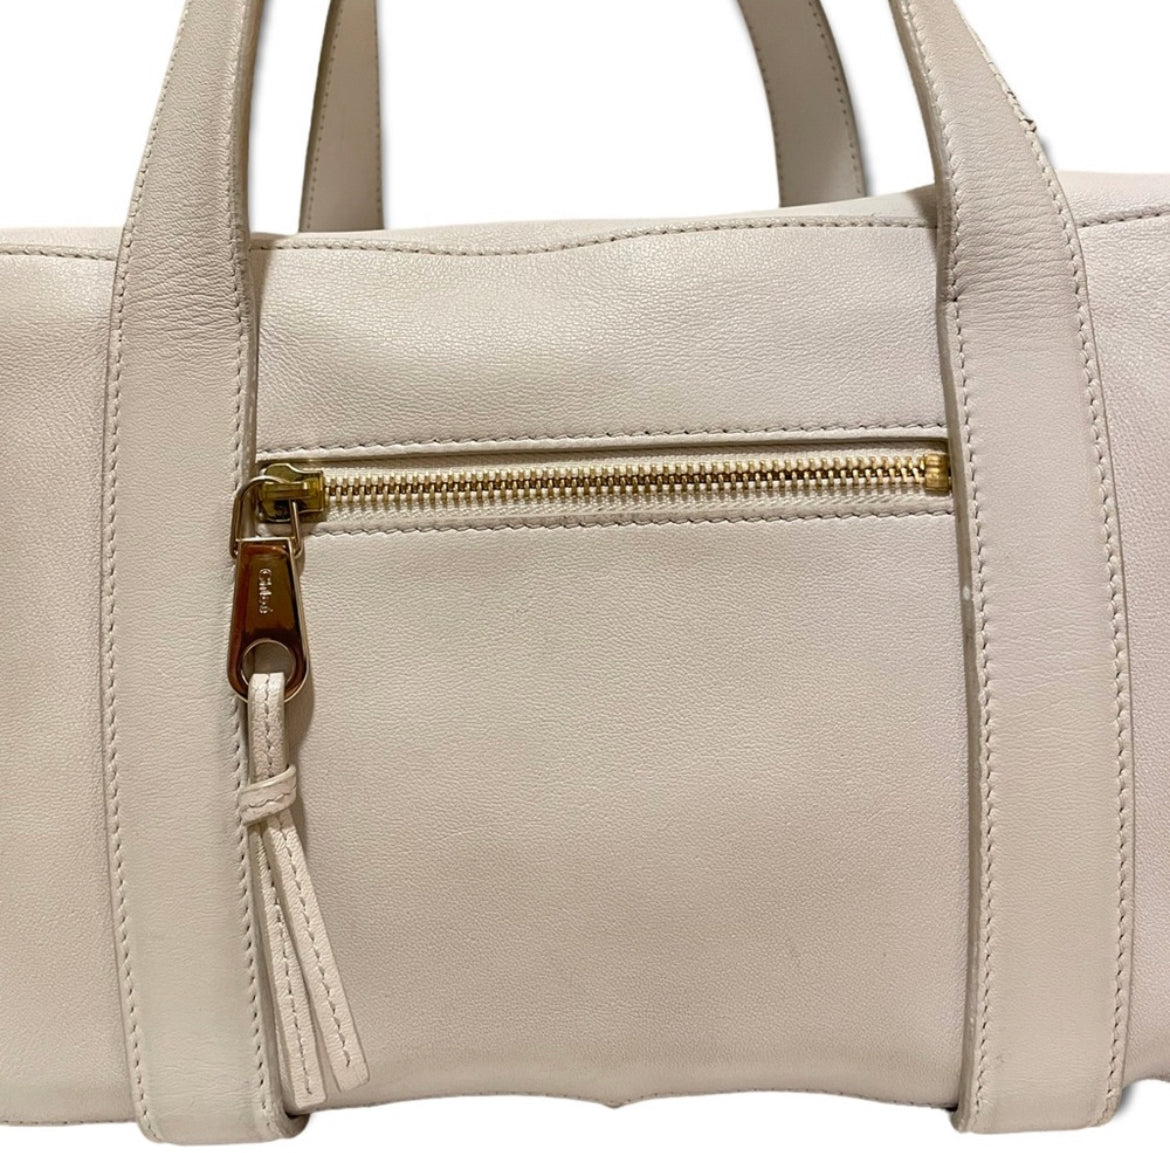 Chloe White leather Tote Handbag